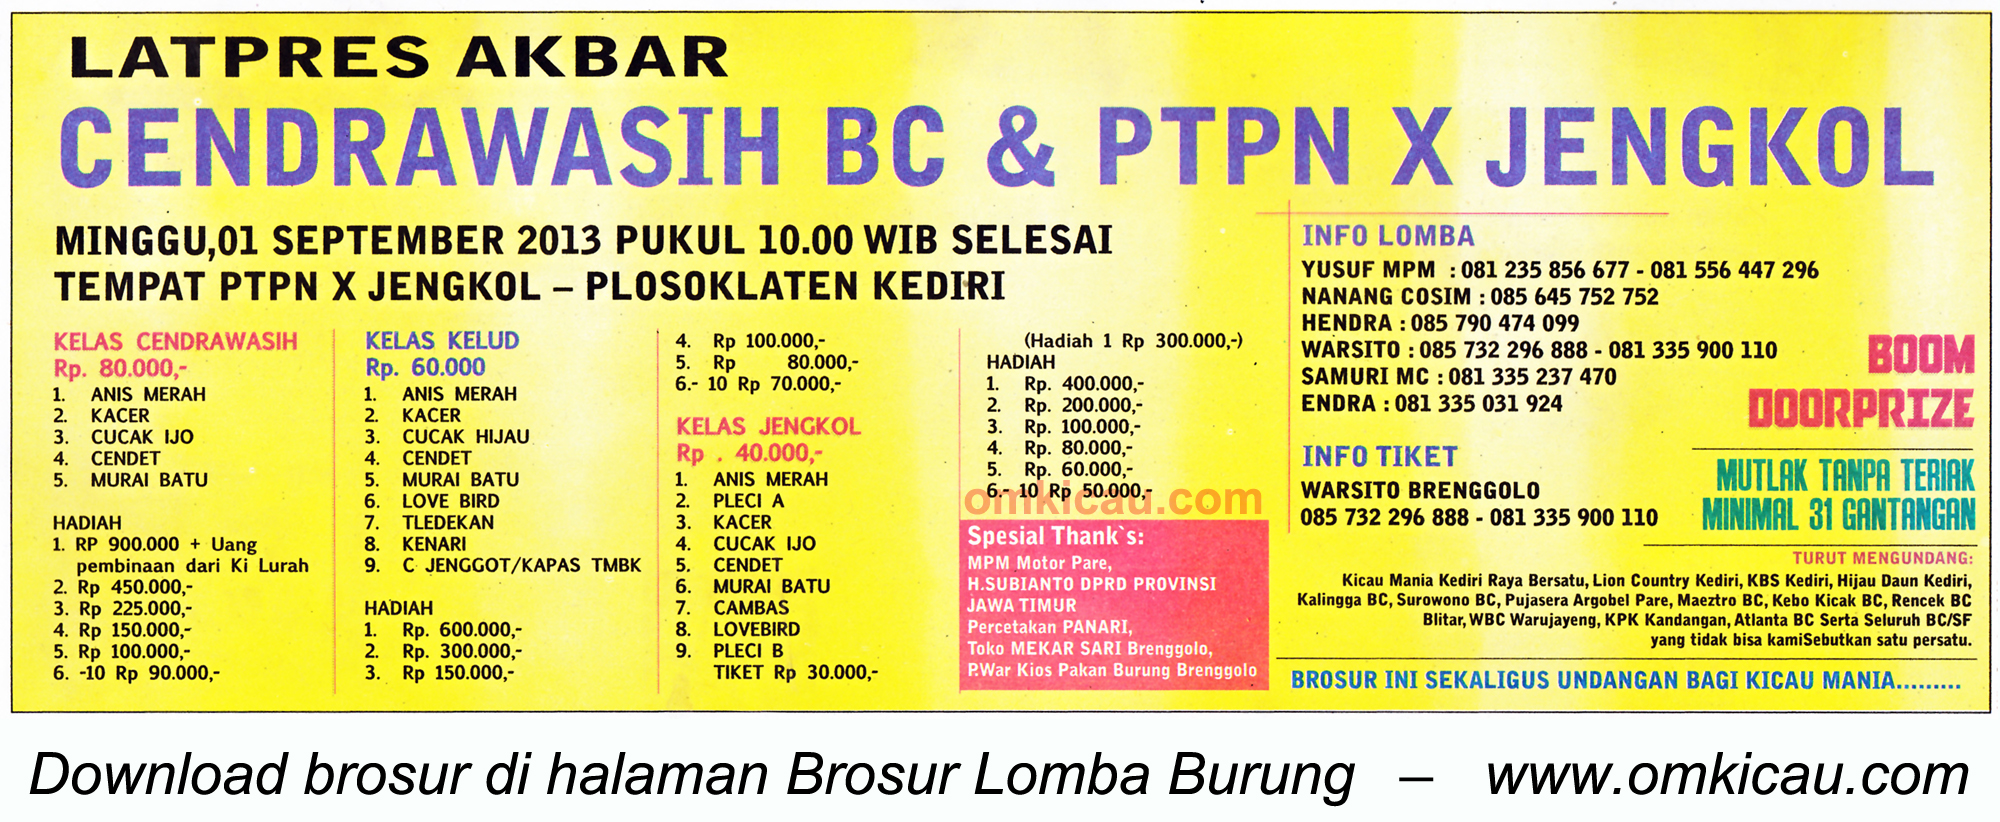 Brosur Latpres Akbar Cendrawasih BC Kediri 1 Sept 2013